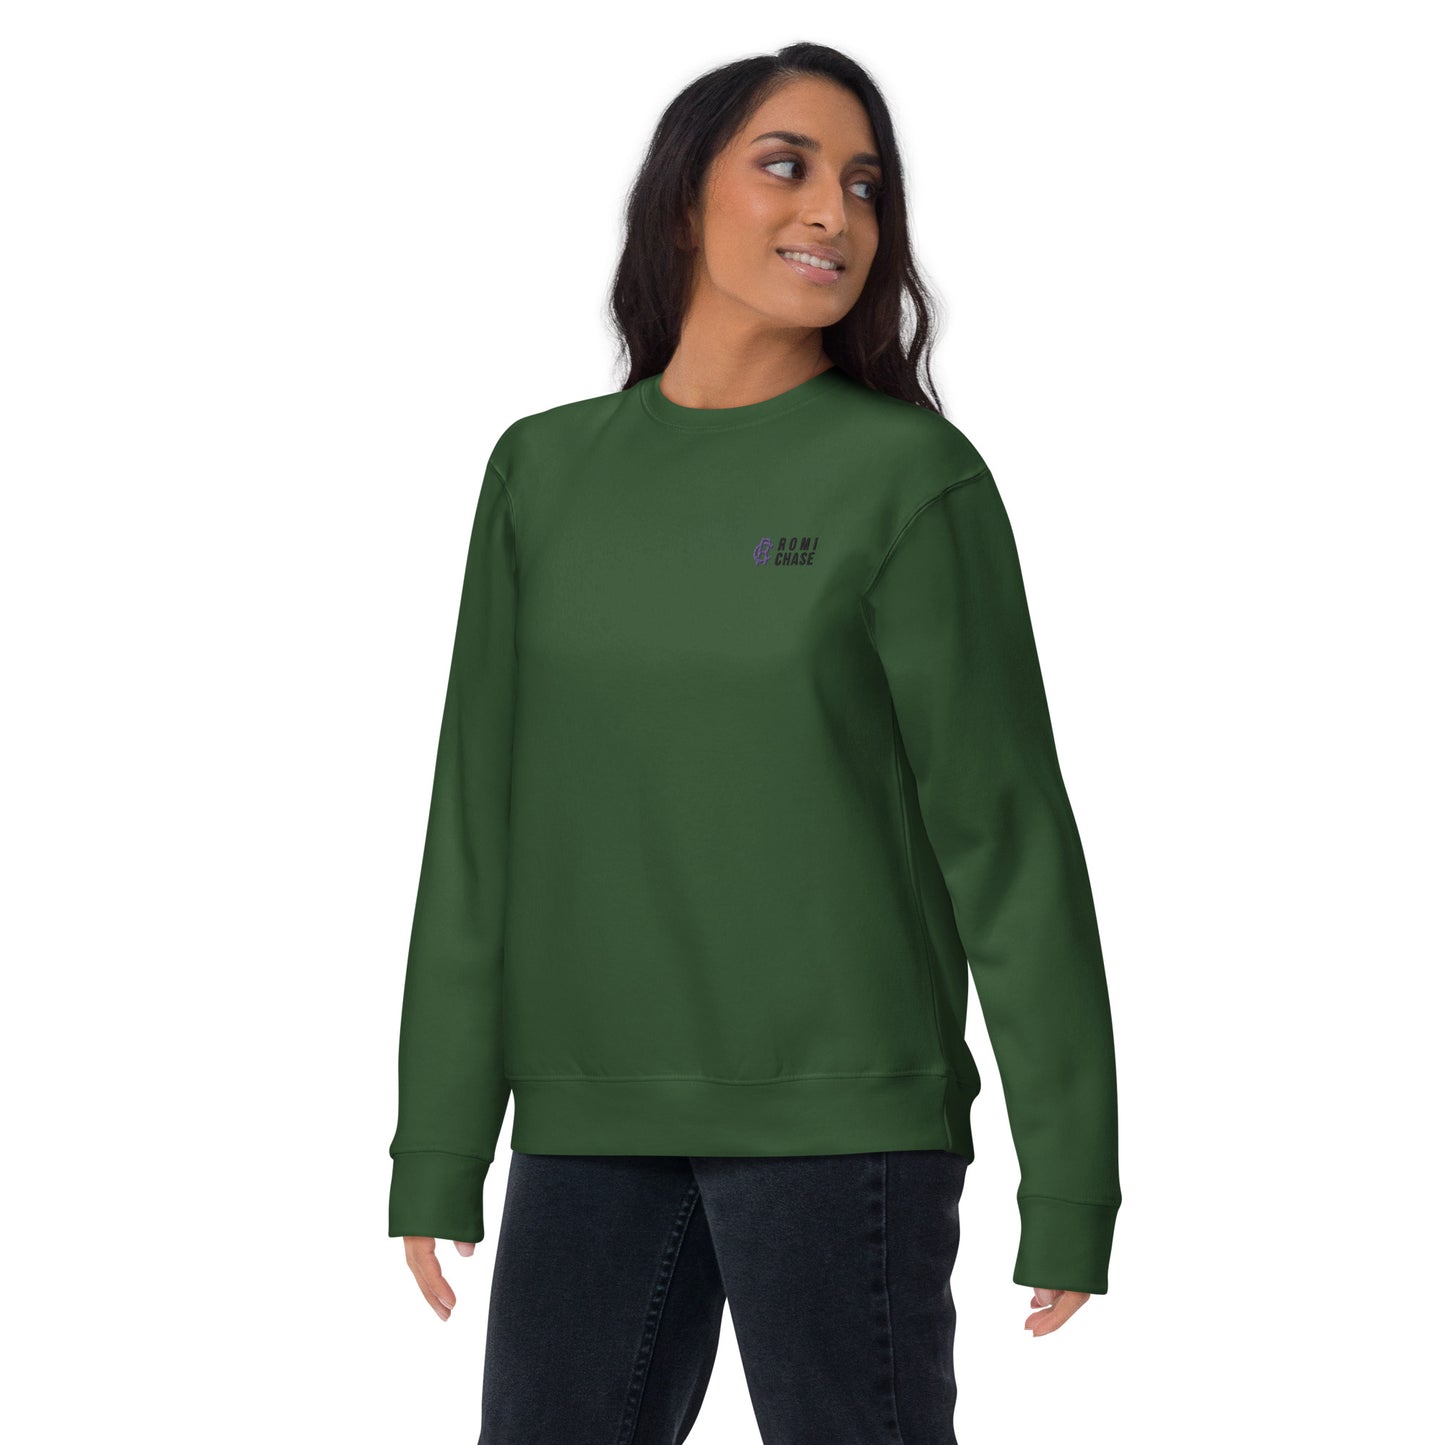 Romi Chase Logo Unisex Premium Sweatshirt